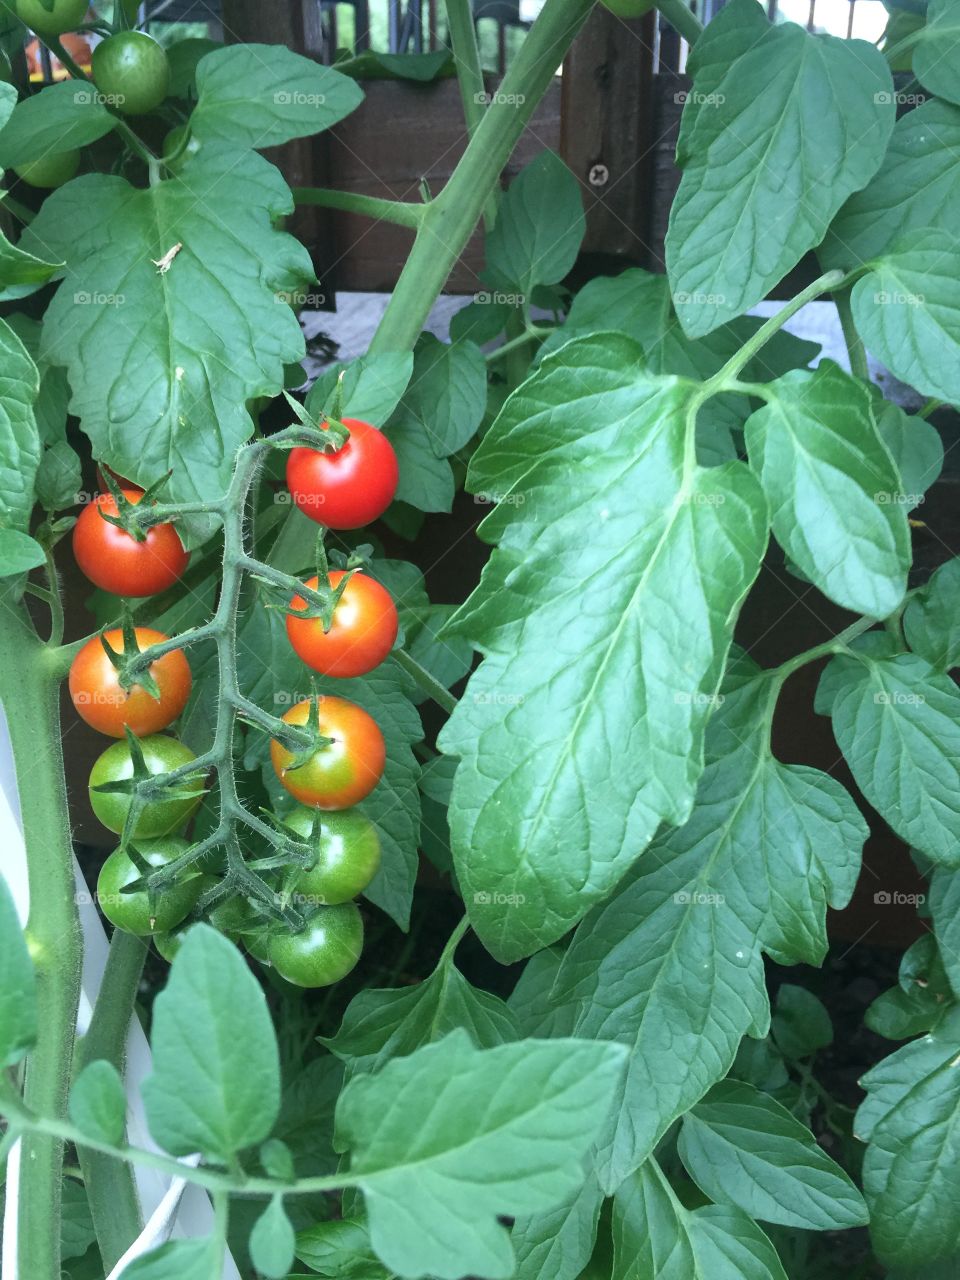 View of tomato plant